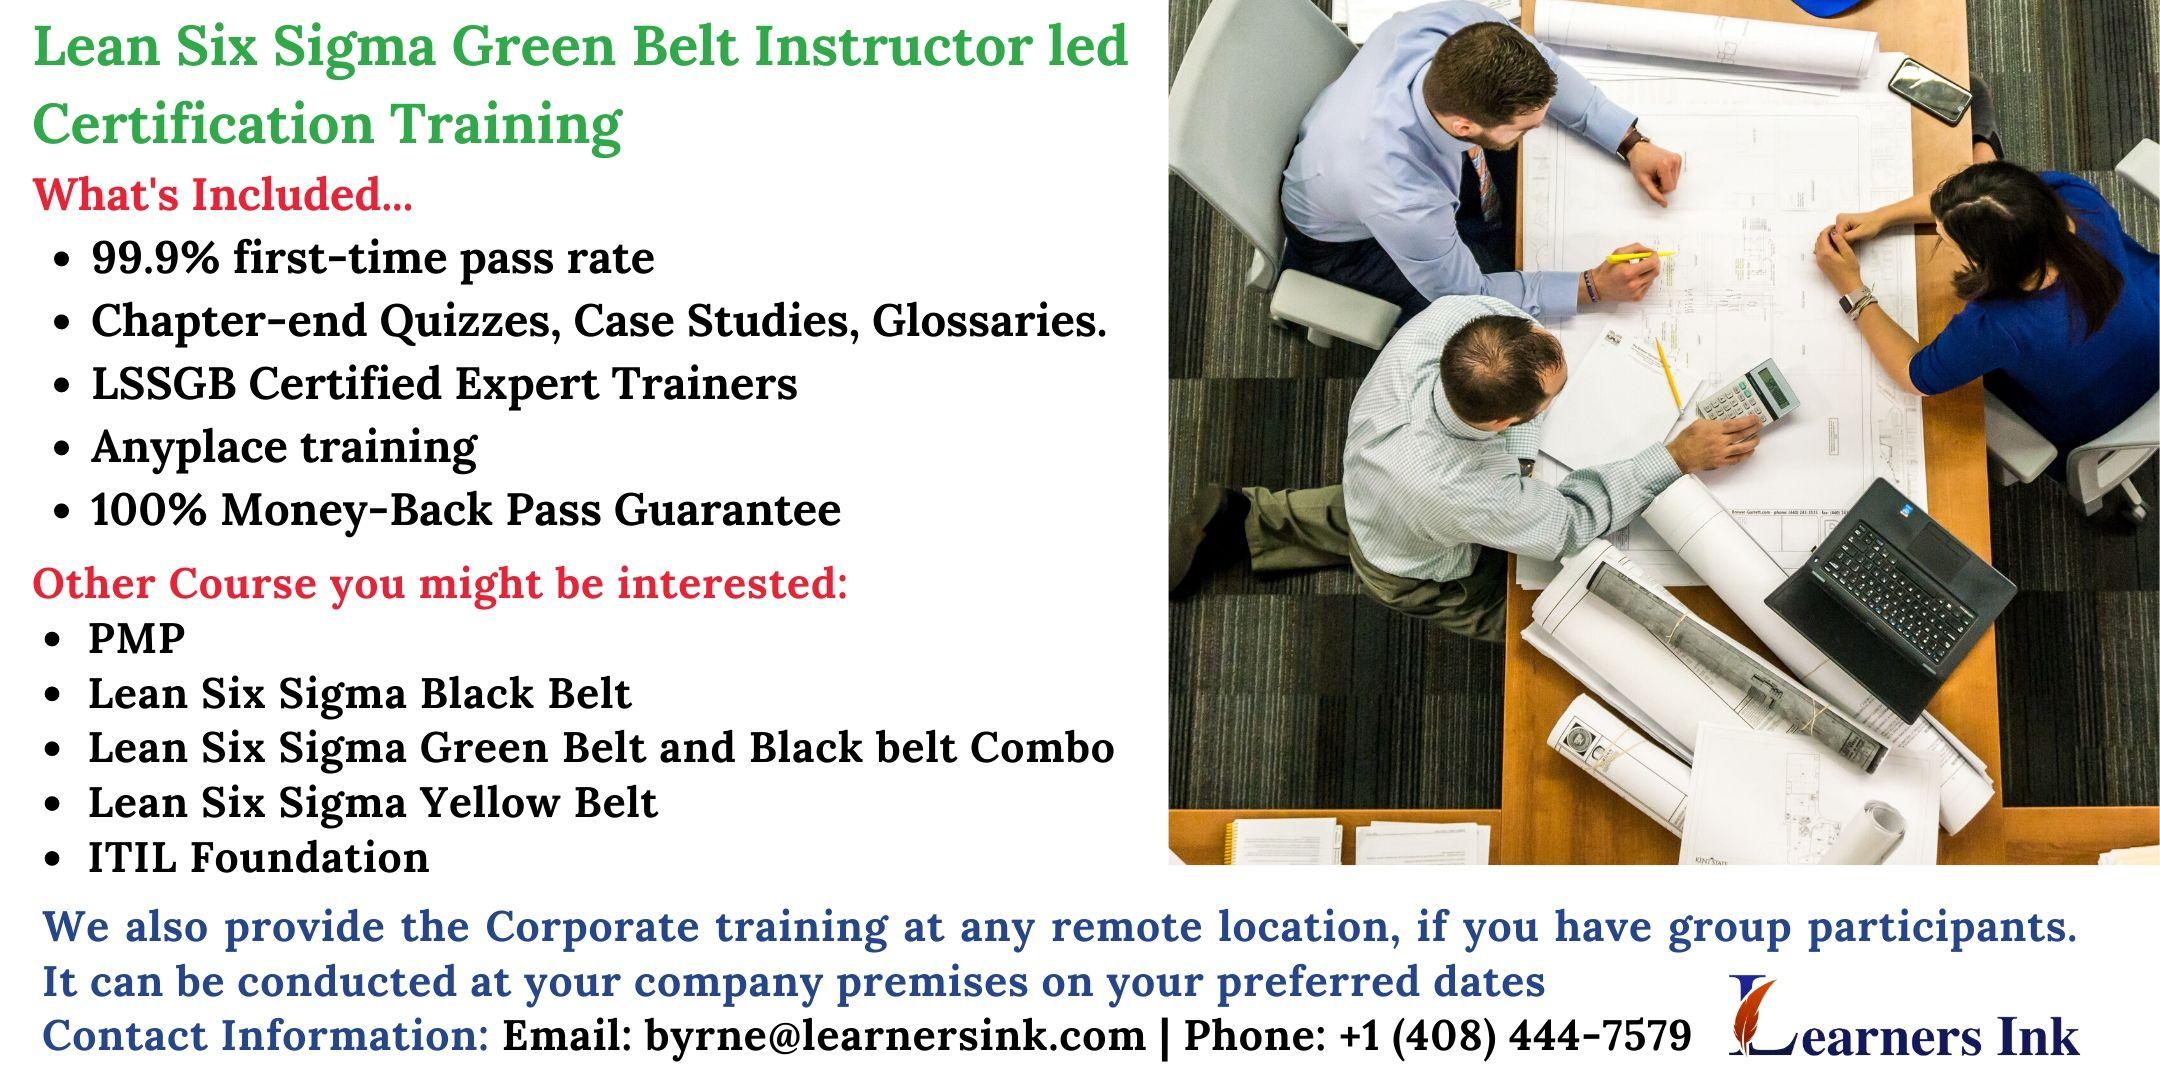 Lean Six Sigma Green Belt Certification Training Course (LSSGB) in Hialeah